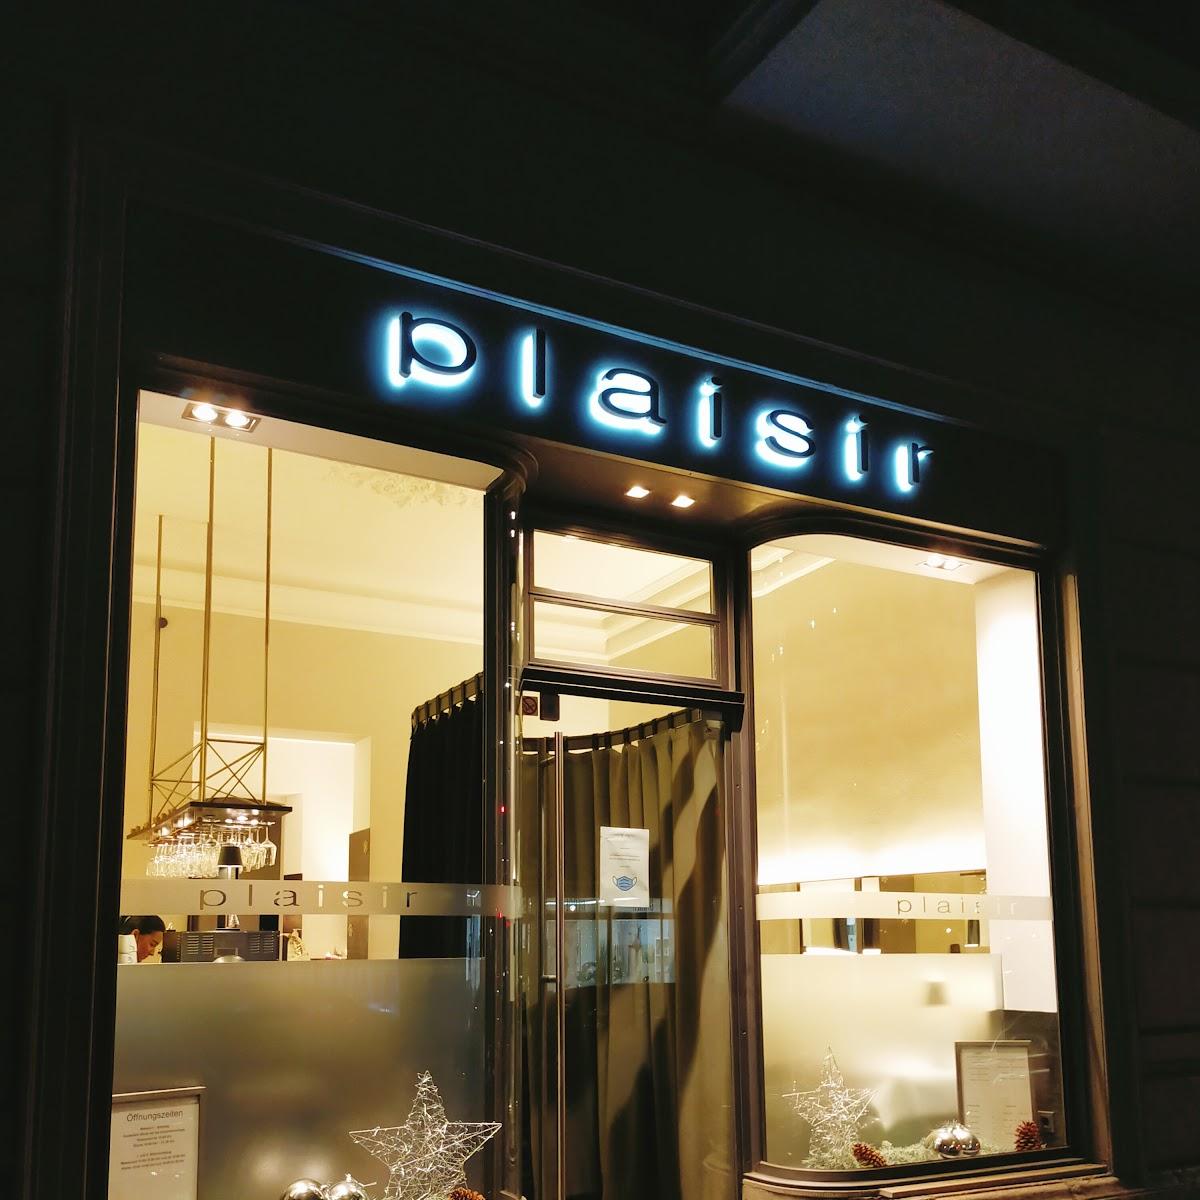 Restaurant "plaisir by Hamid Heidarzadeh" in Aachen